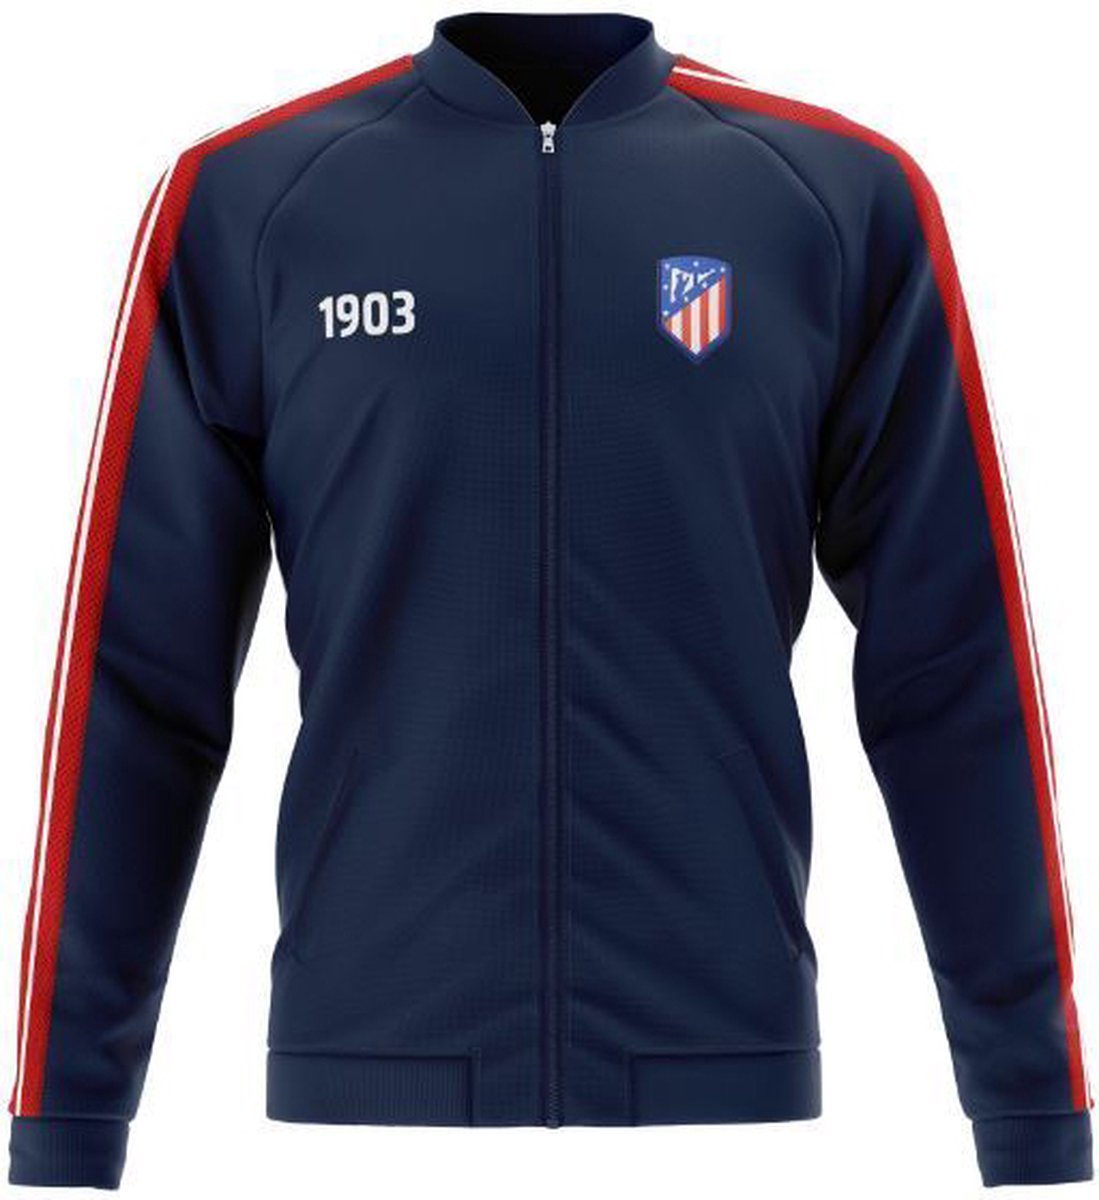 Atletico Madrid jacket volwassenen - maat L - 1903 blauw/rood